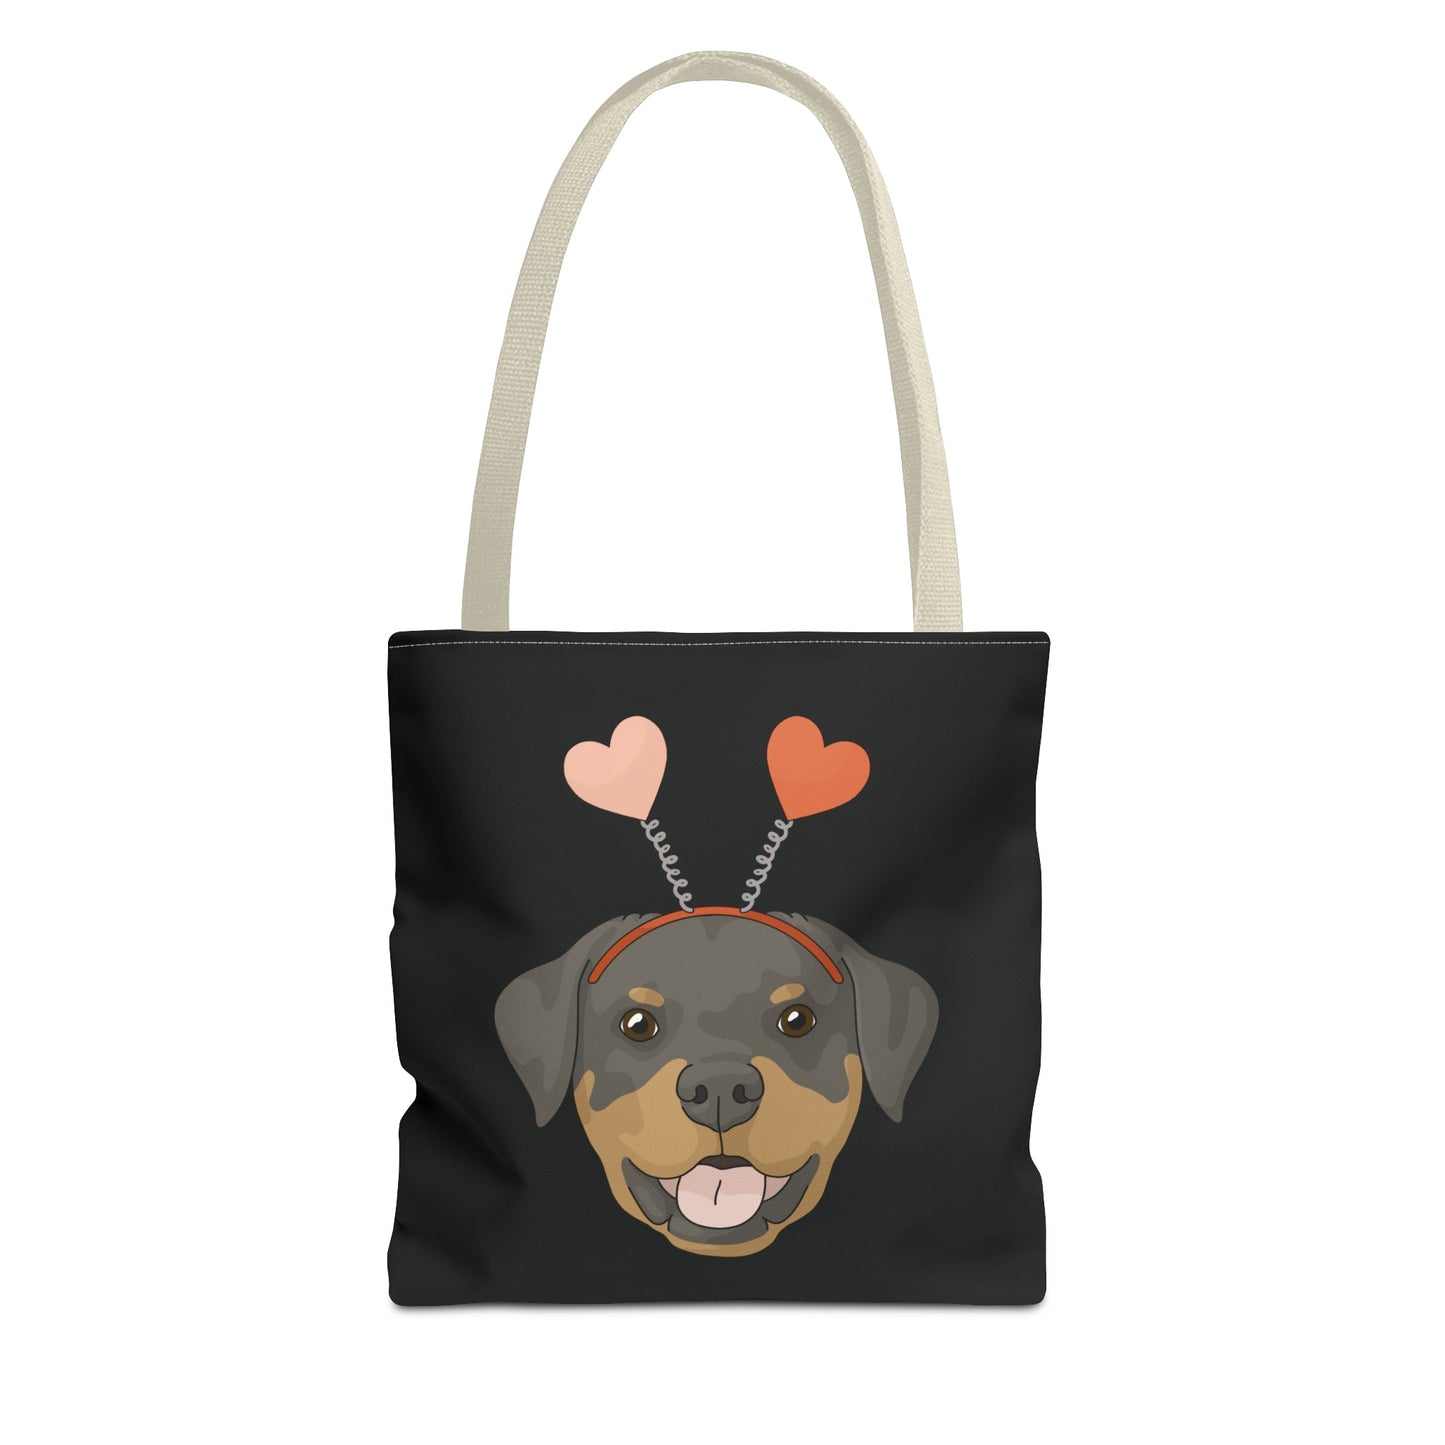 A Very Rottie Valentine | Tote Bag - Detezi Designs-21974626846111994226